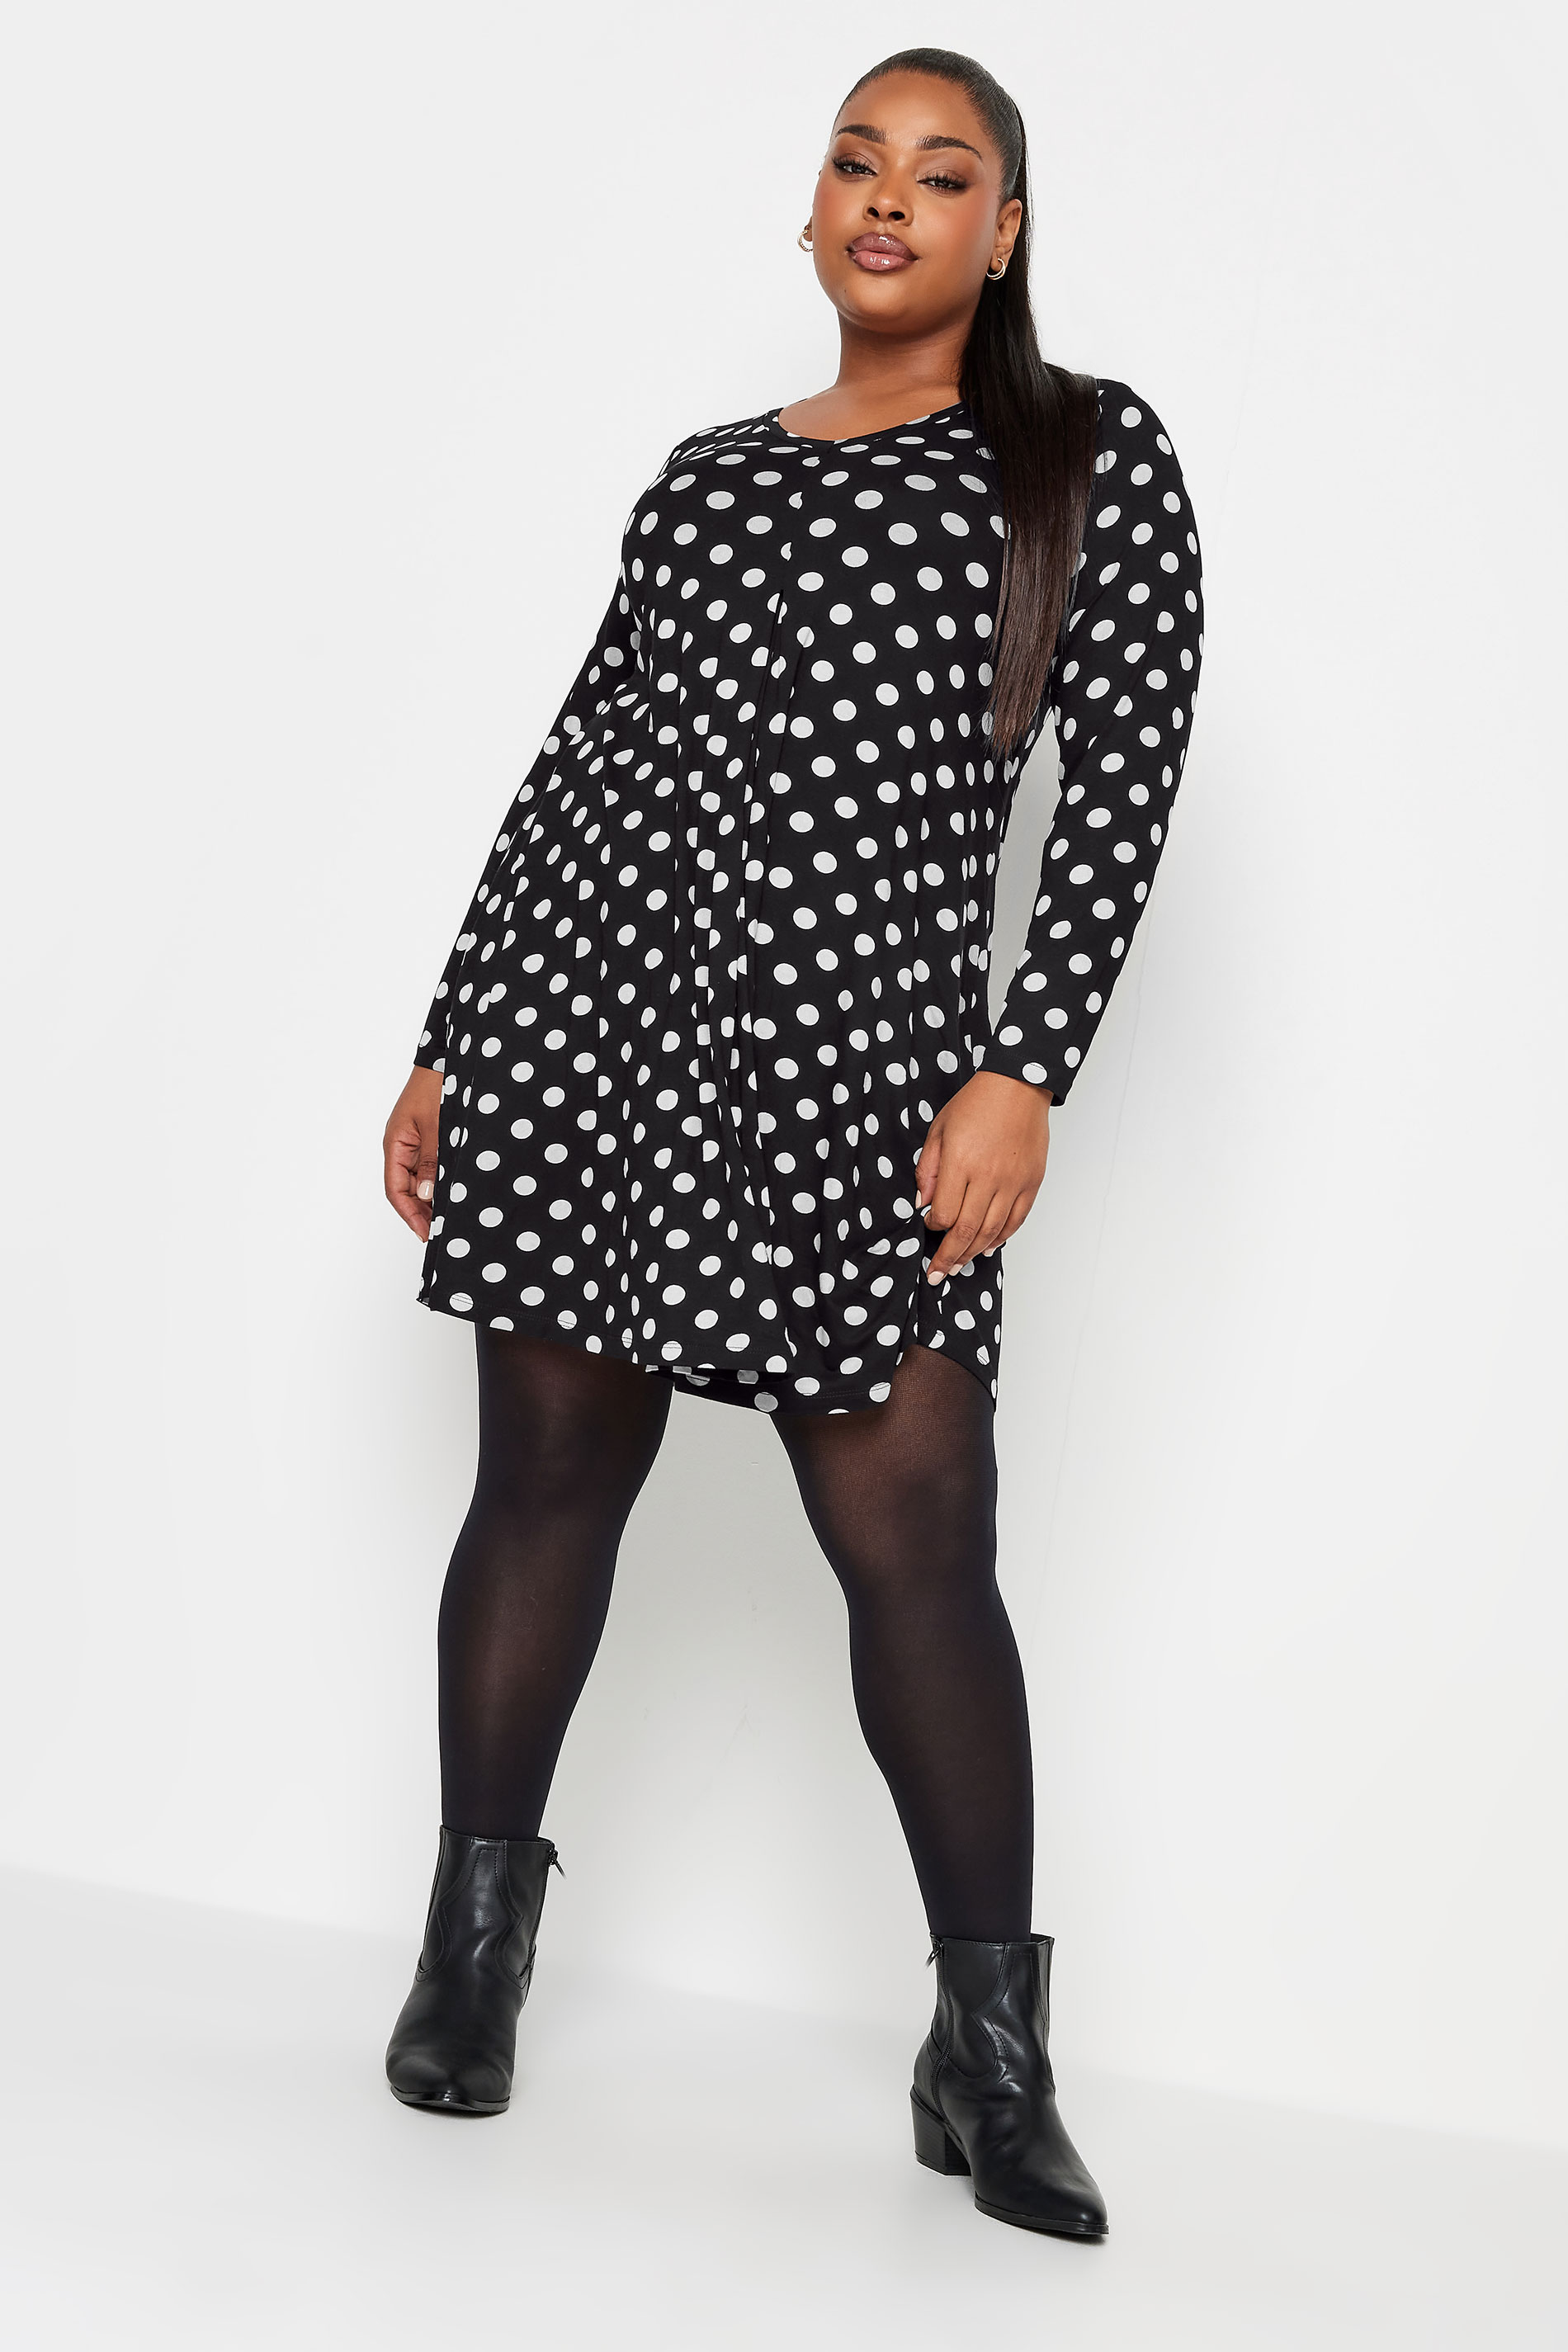 YOURS Plus Size Black Polka Dot Print Swing Mini Dress | Yours Clothing 2